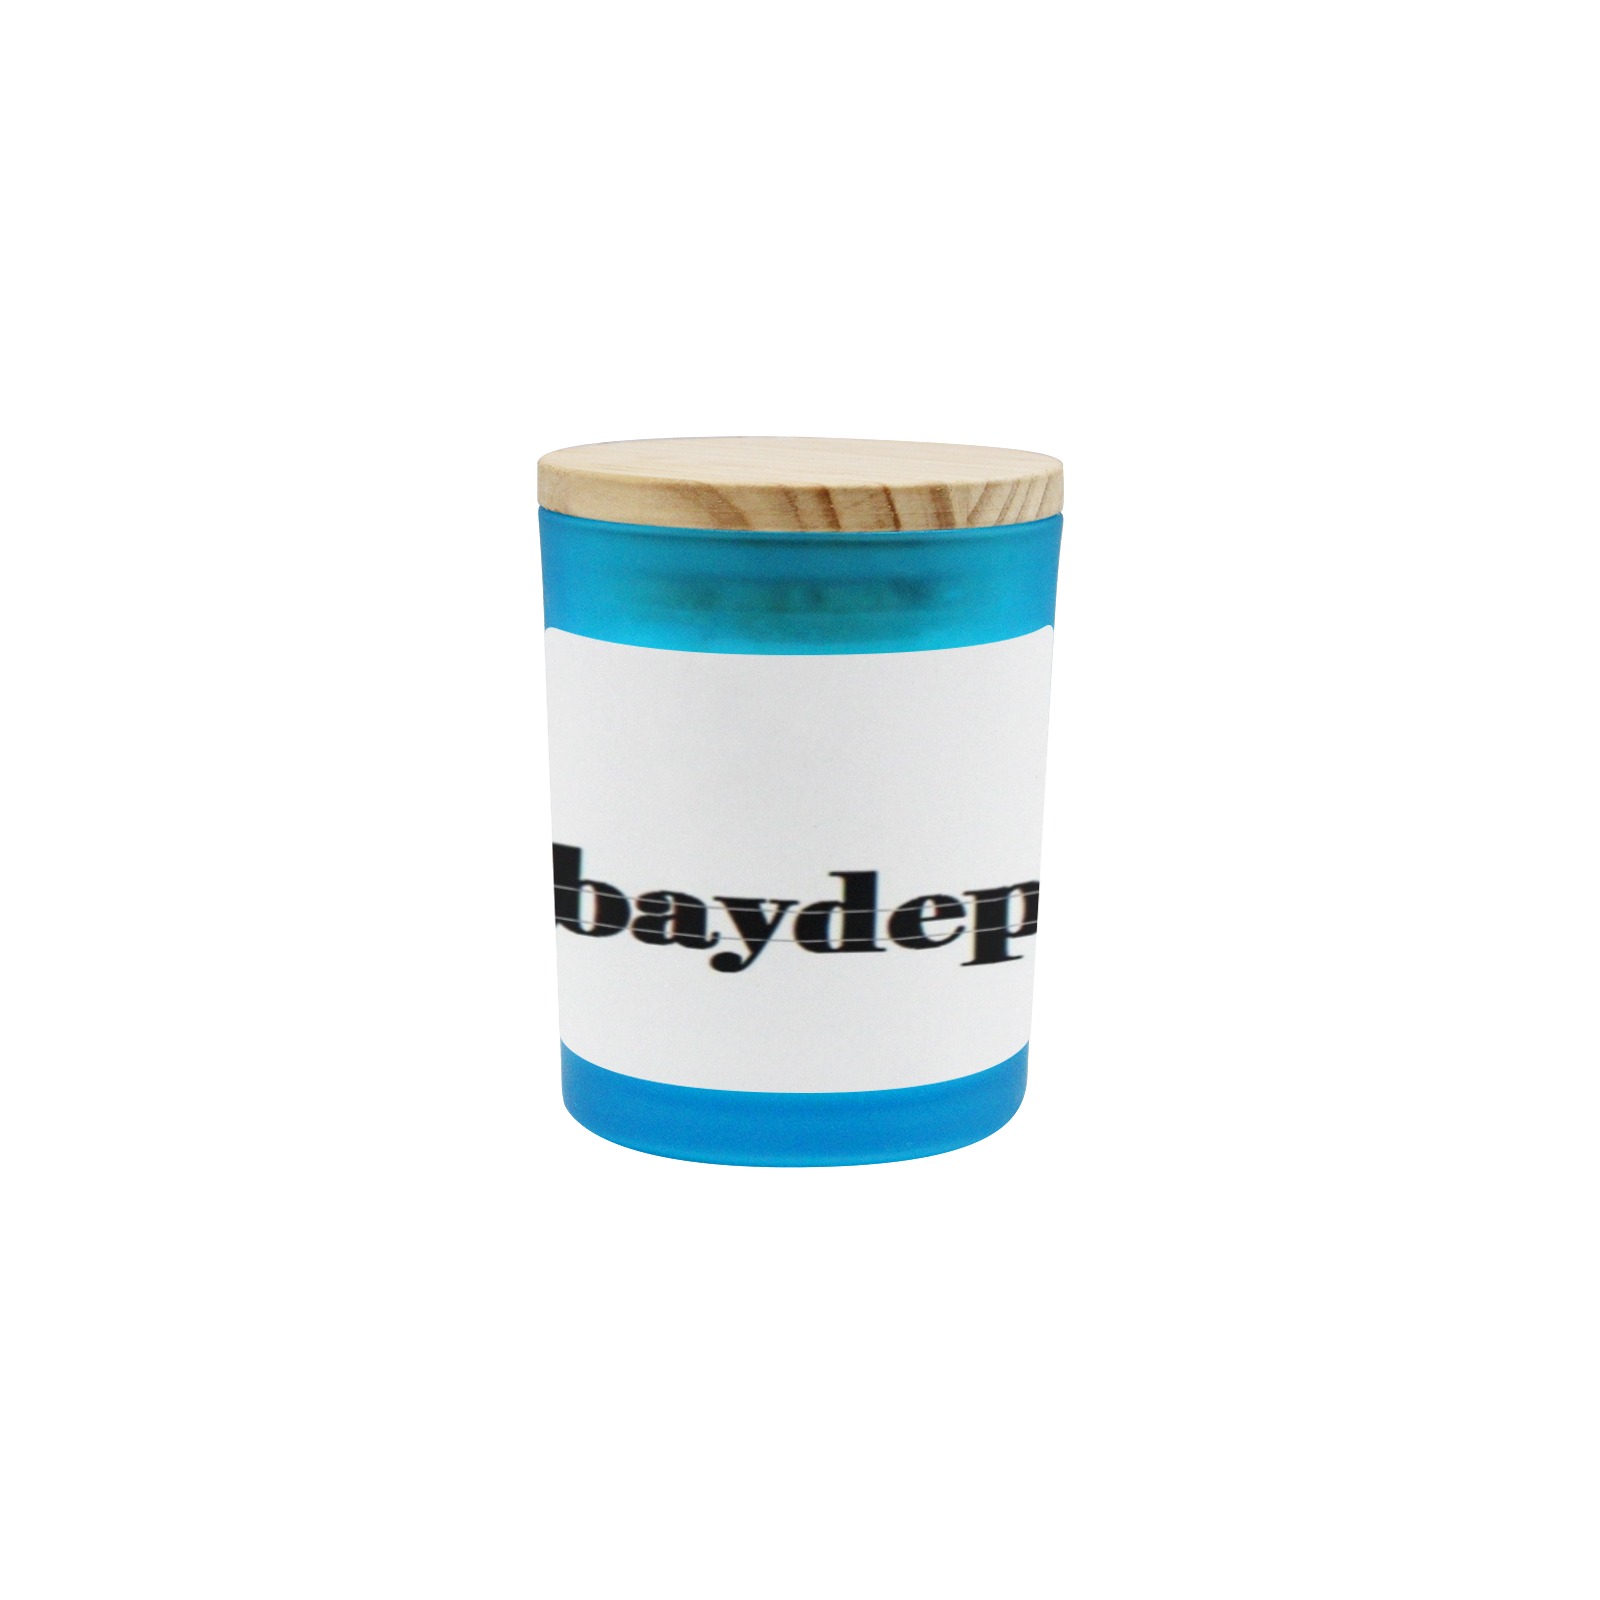 bb g7j77 Blue Glass Candle Cup (Wood Sage & Sea Salt)